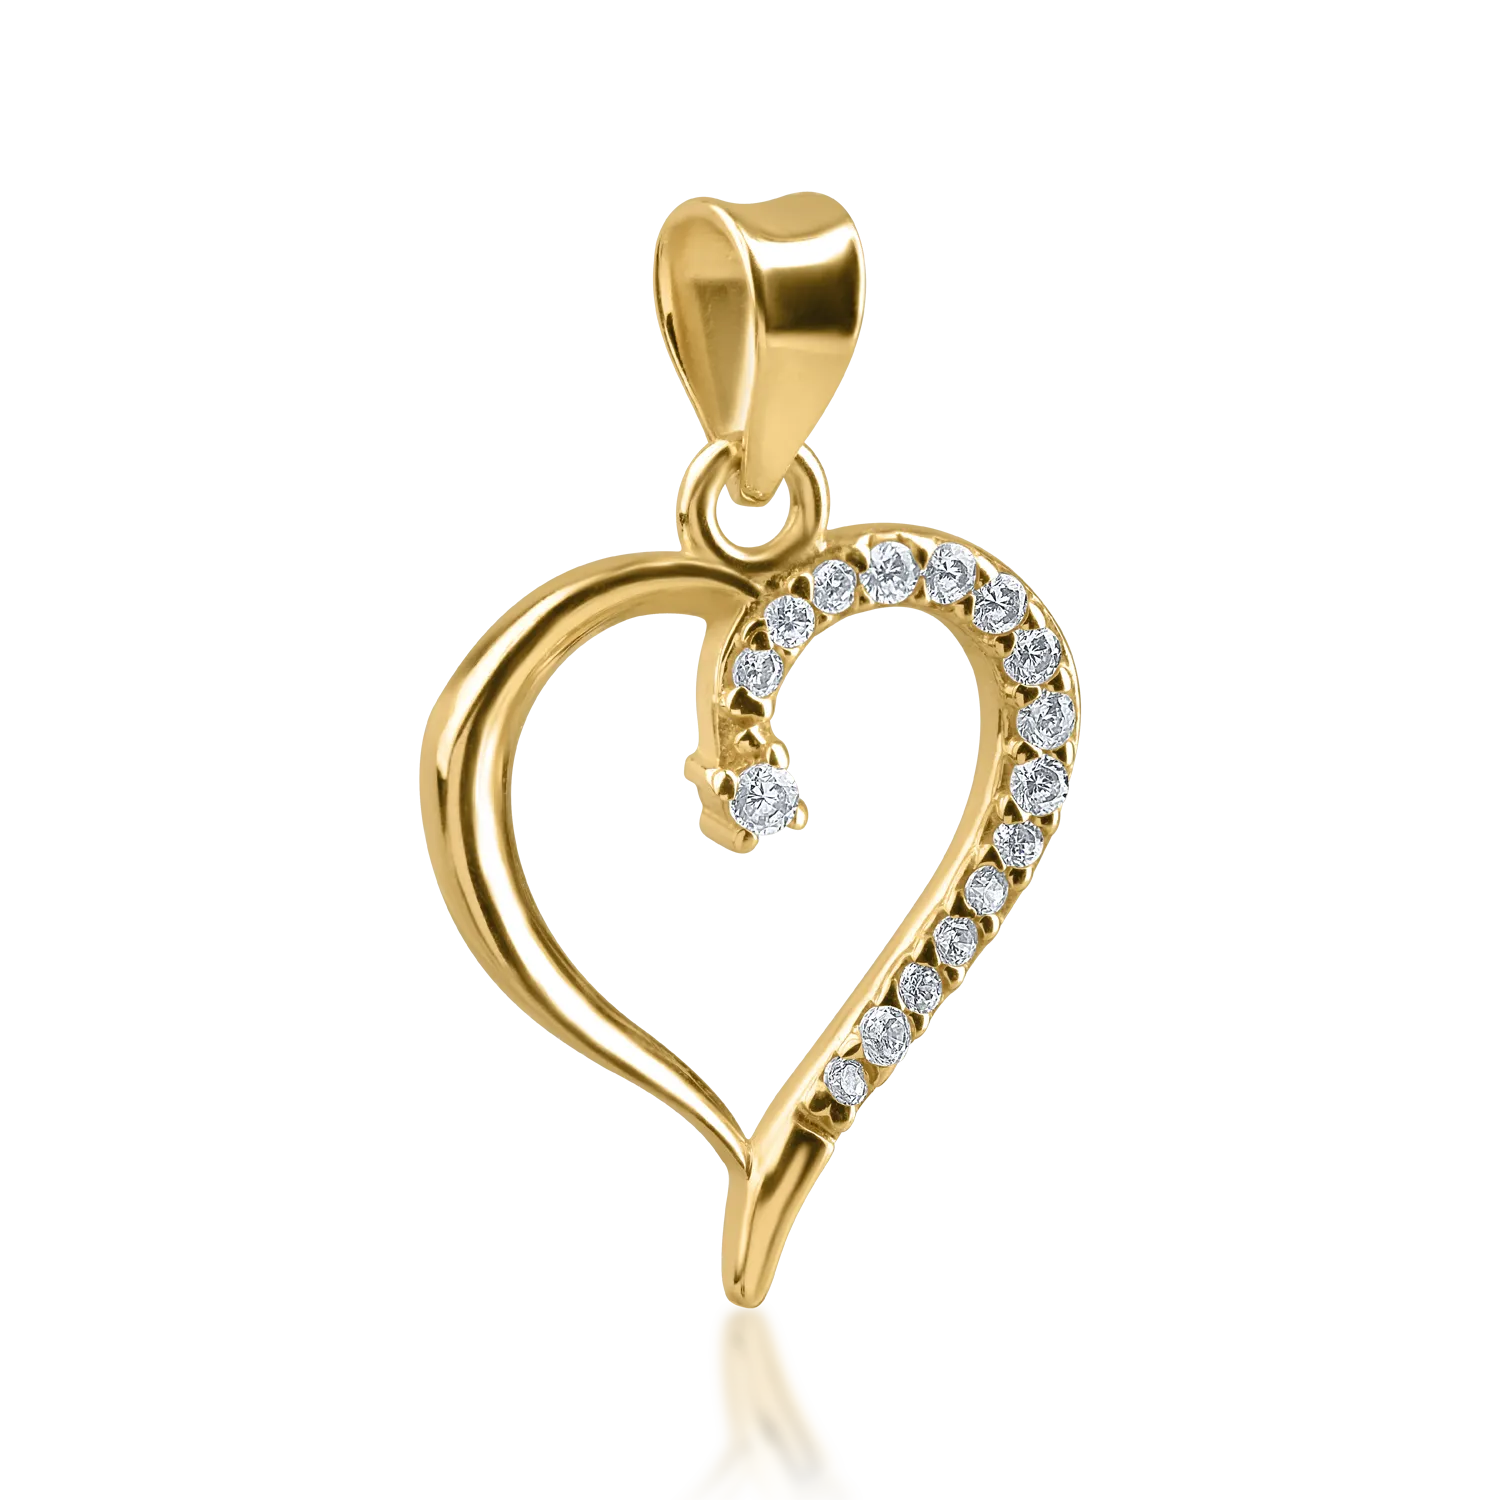 Yellow gold heart pendant